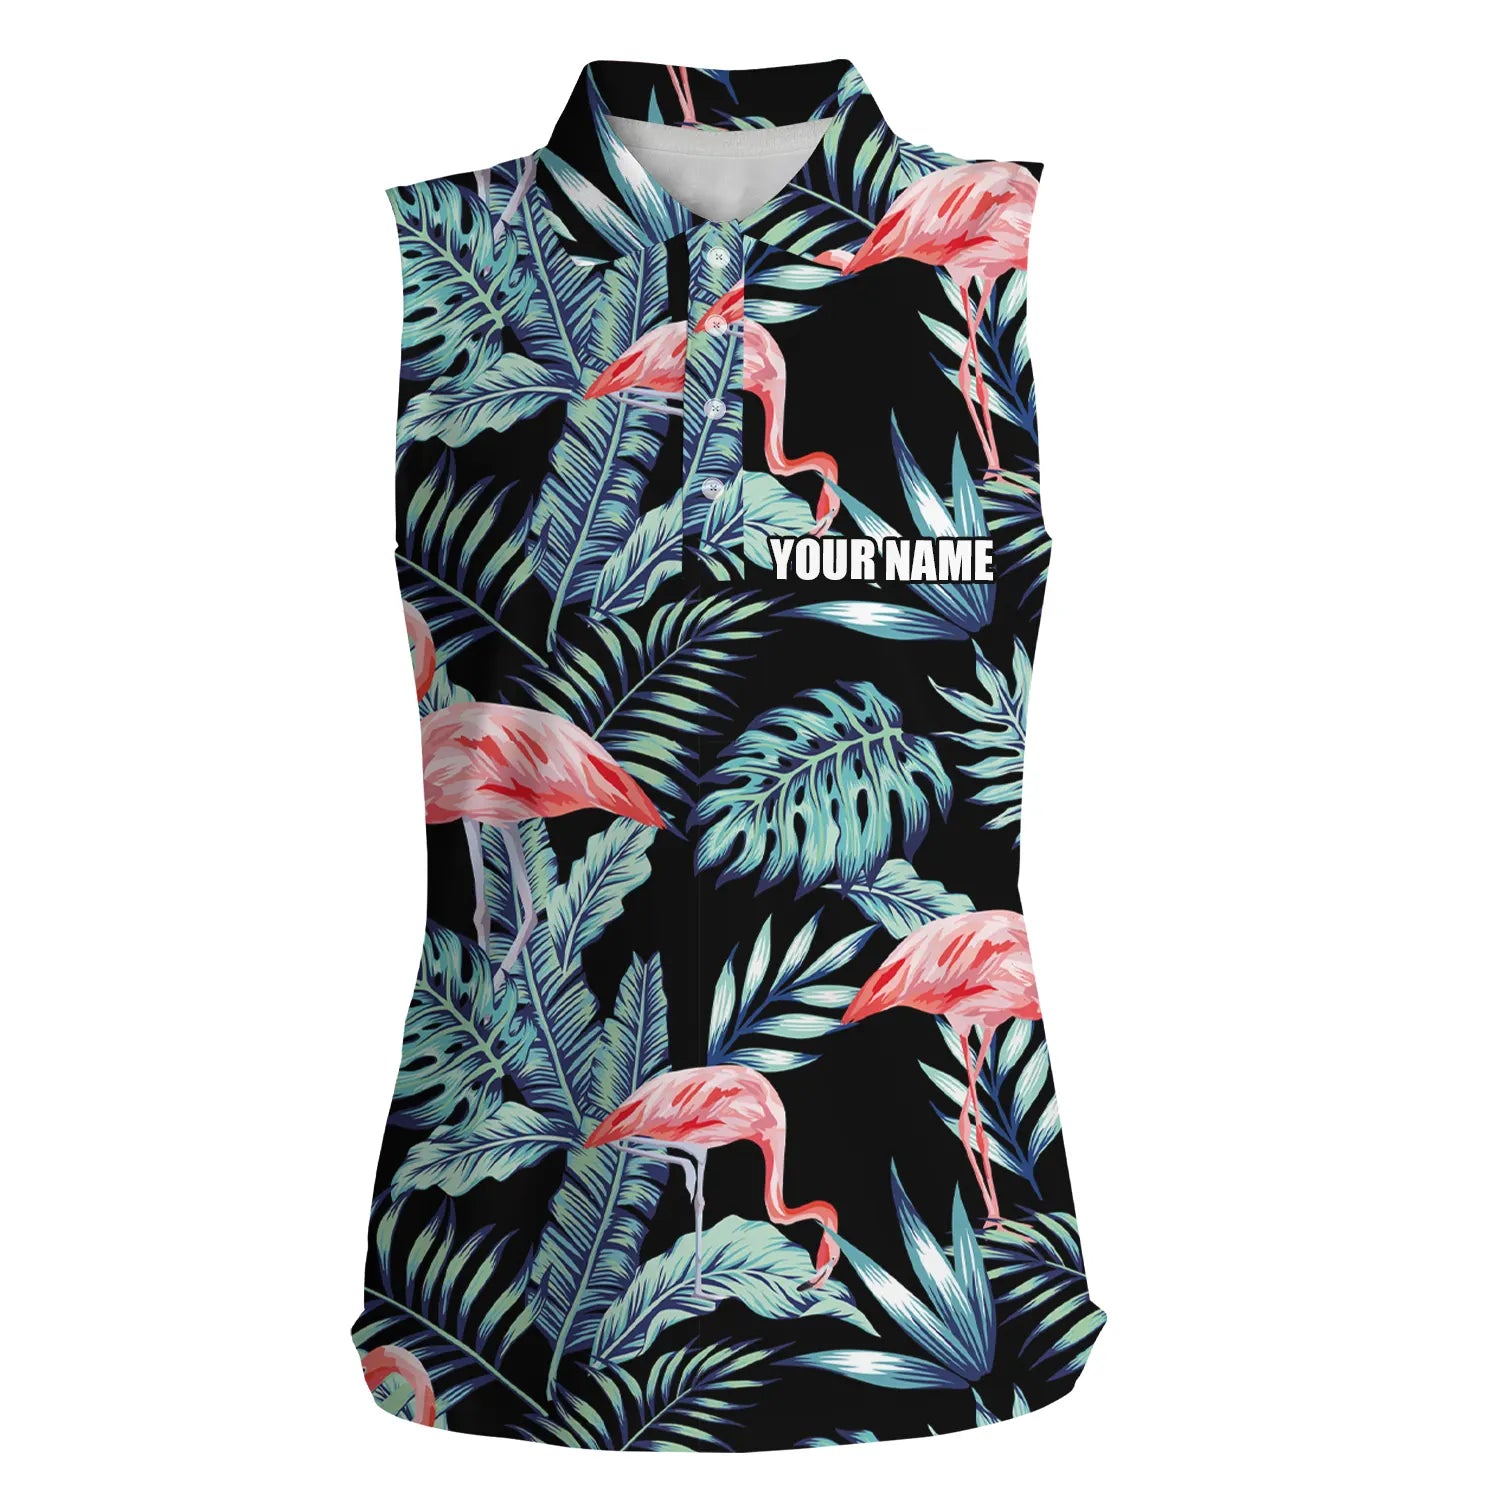 Women sleeveless polo shirt/ blue forest pattern pink flamingo golf shirts custom golf shirts for women